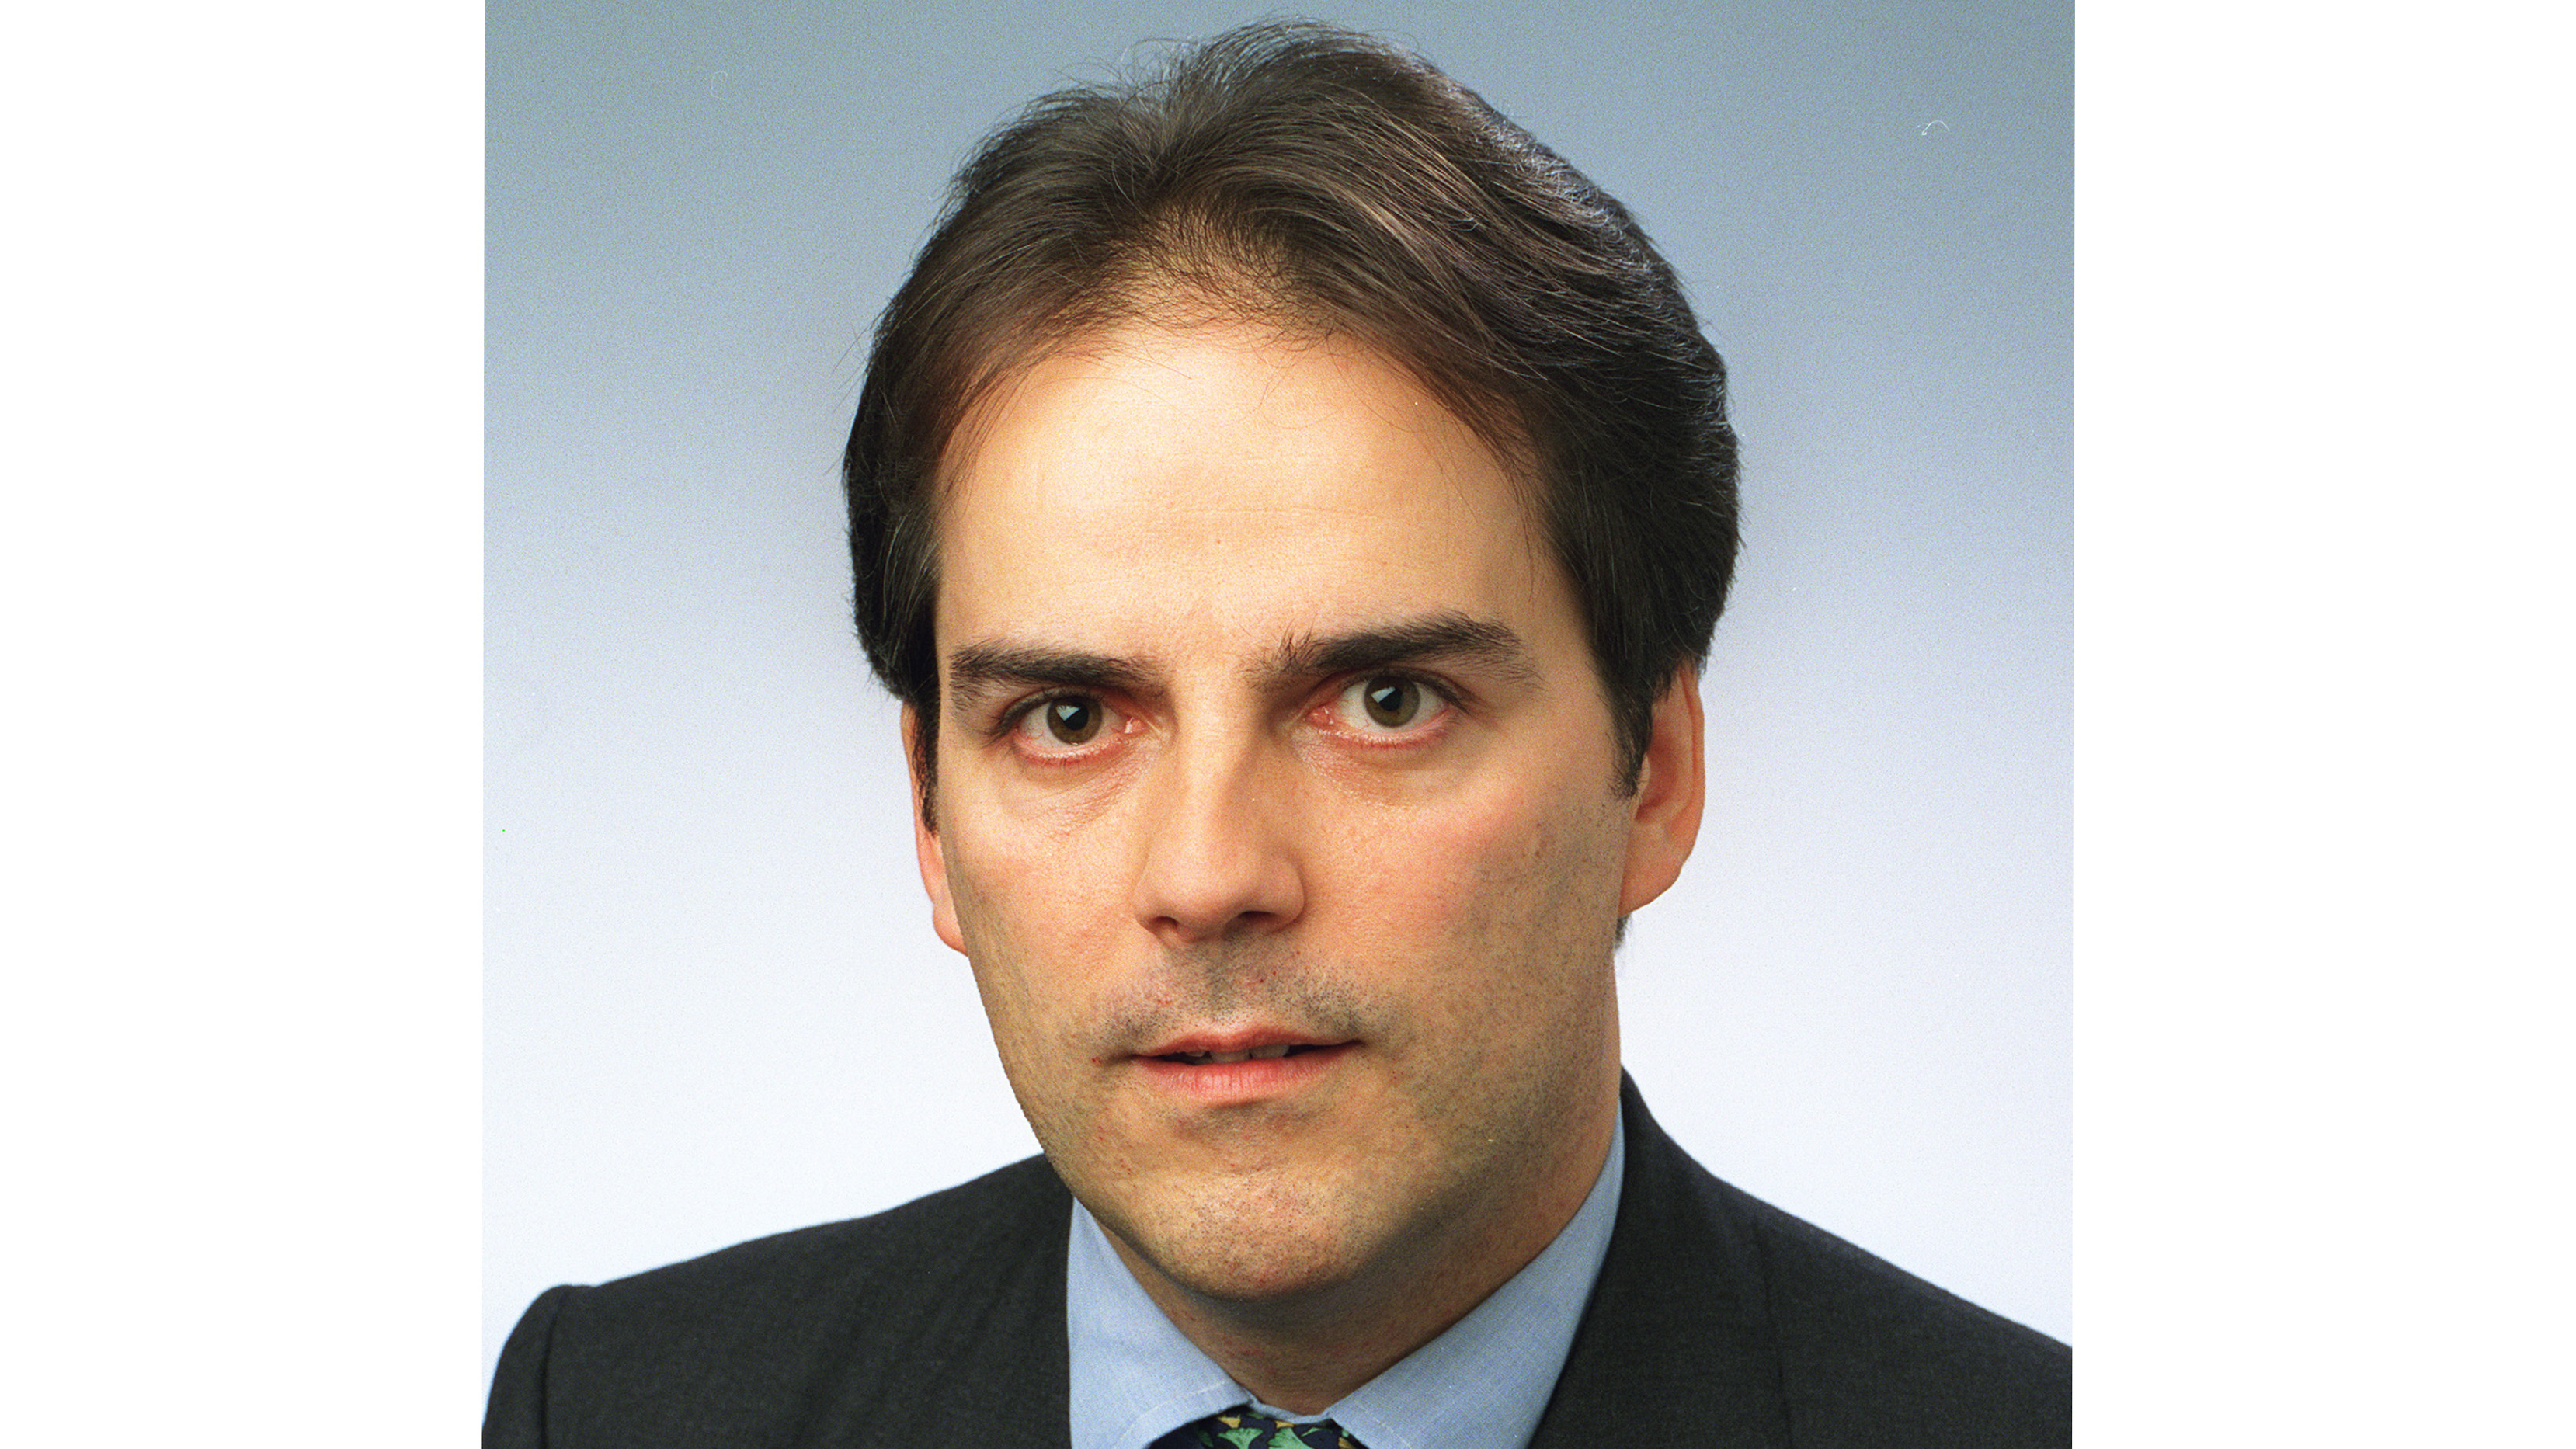 Mark Field MP (Getty)